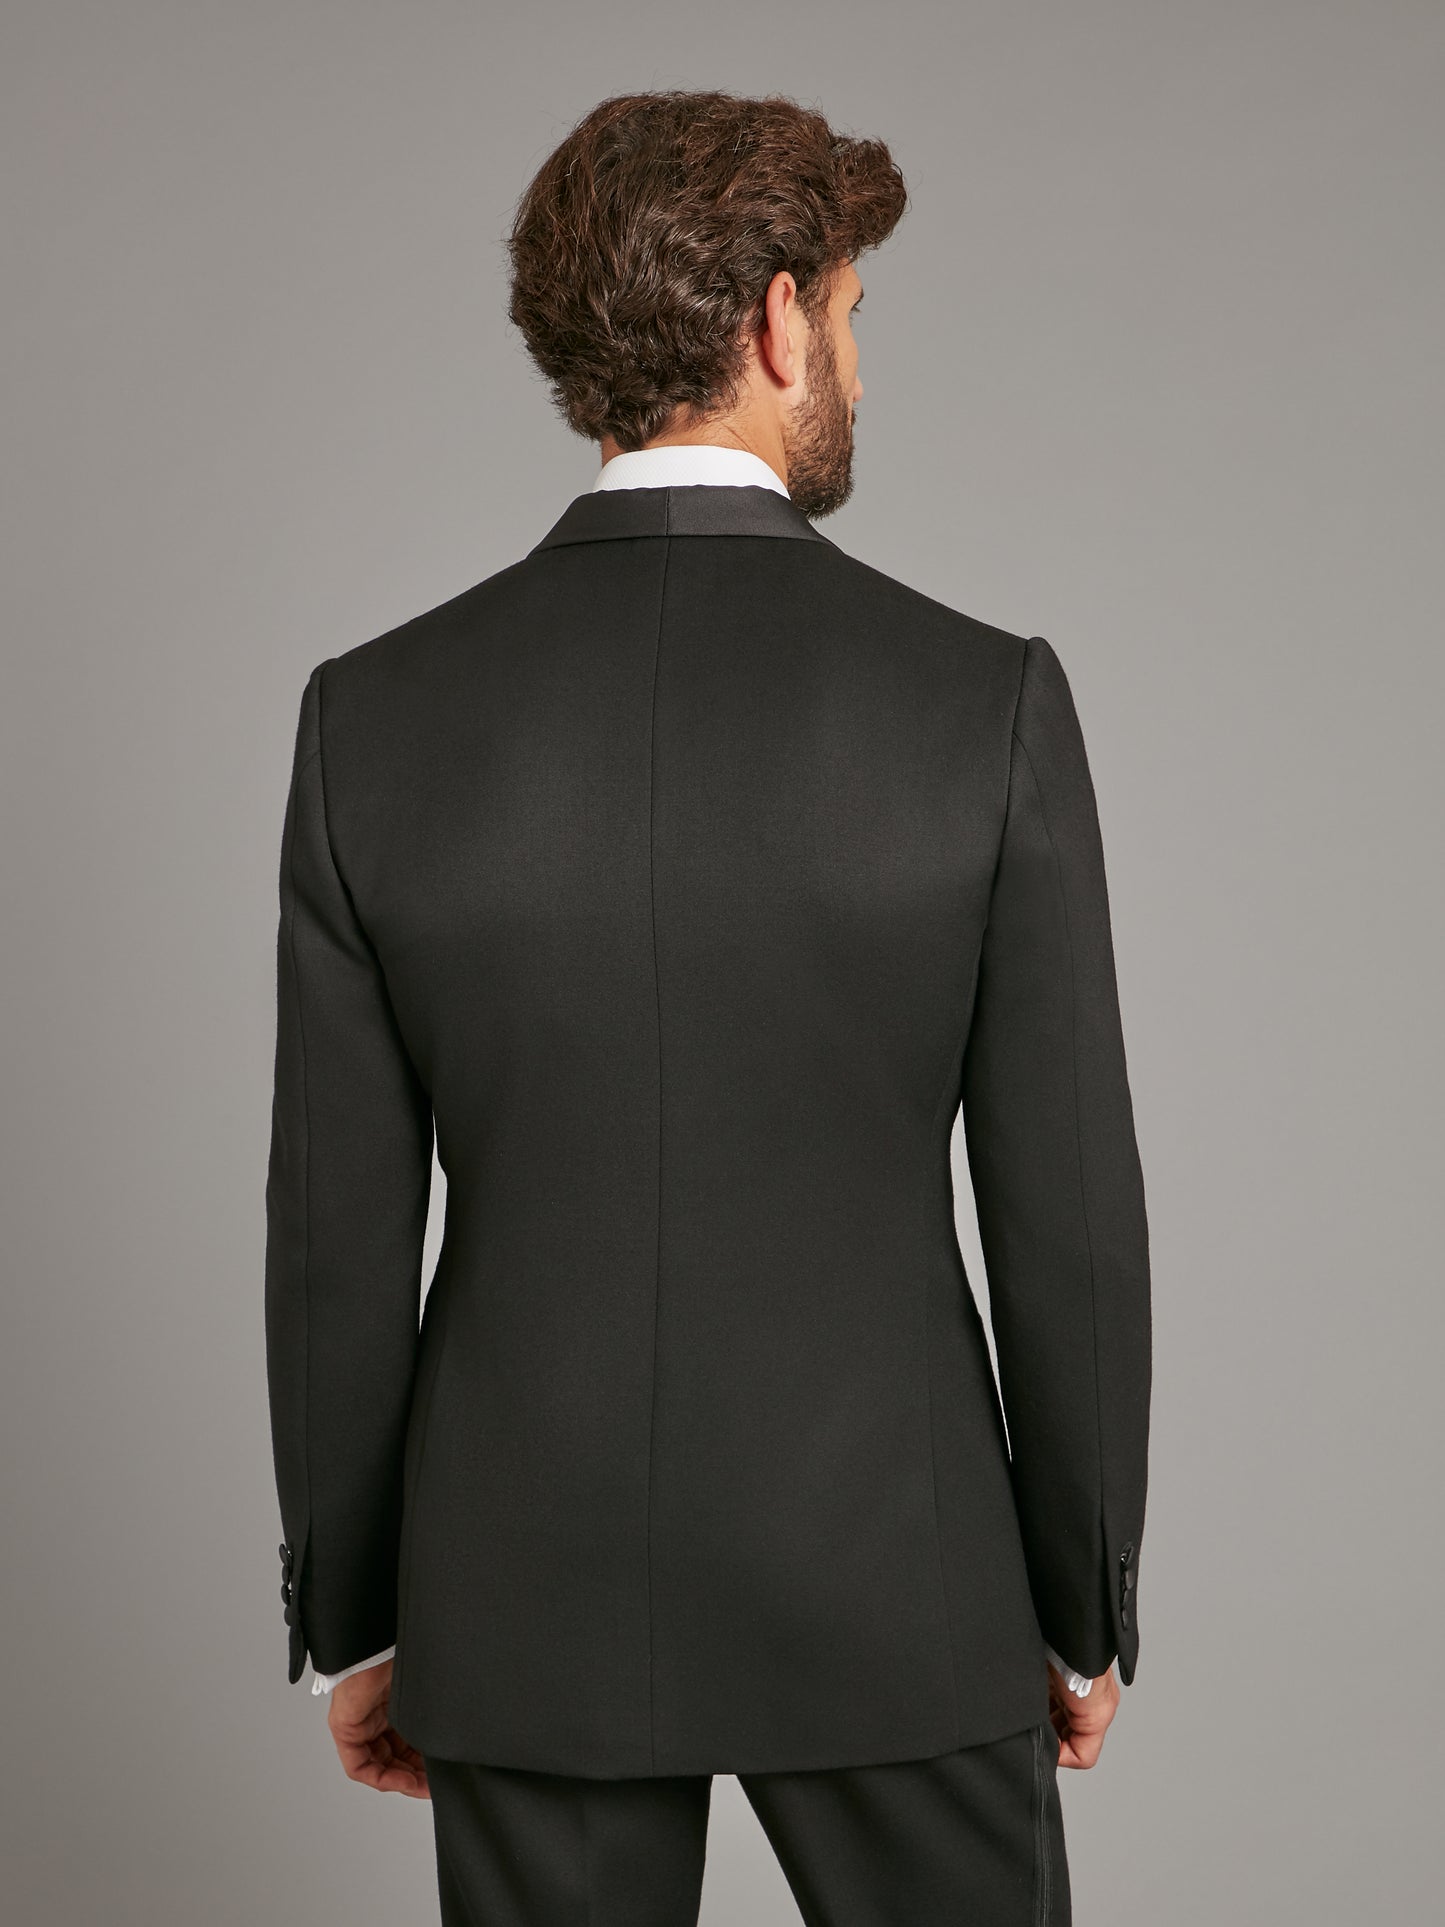 Heavyweight Dinner Suit - Shawl Collar - Black